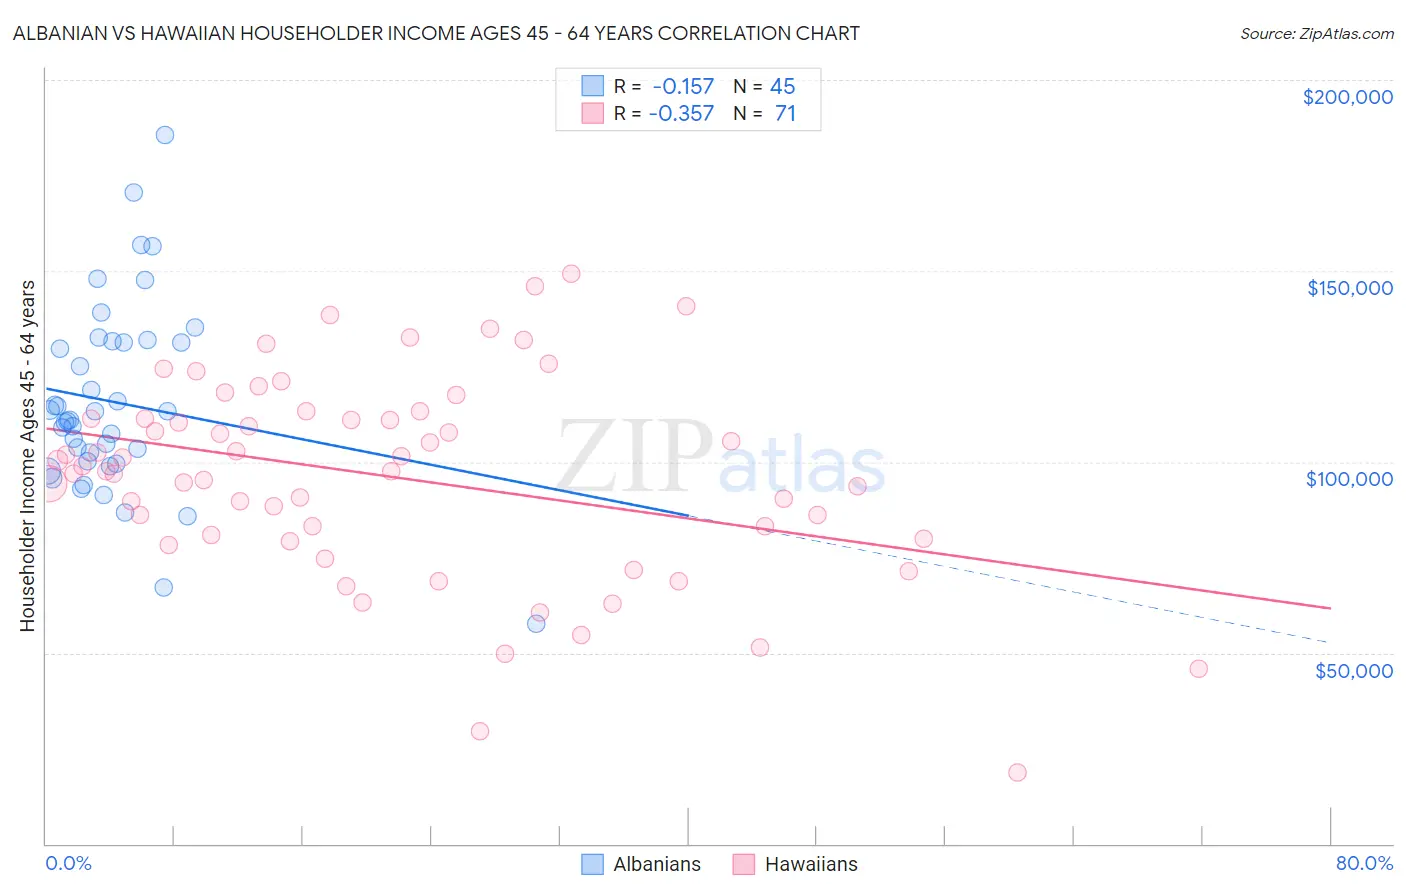 Albanian vs Hawaiian Householder Income Ages 45 - 64 years